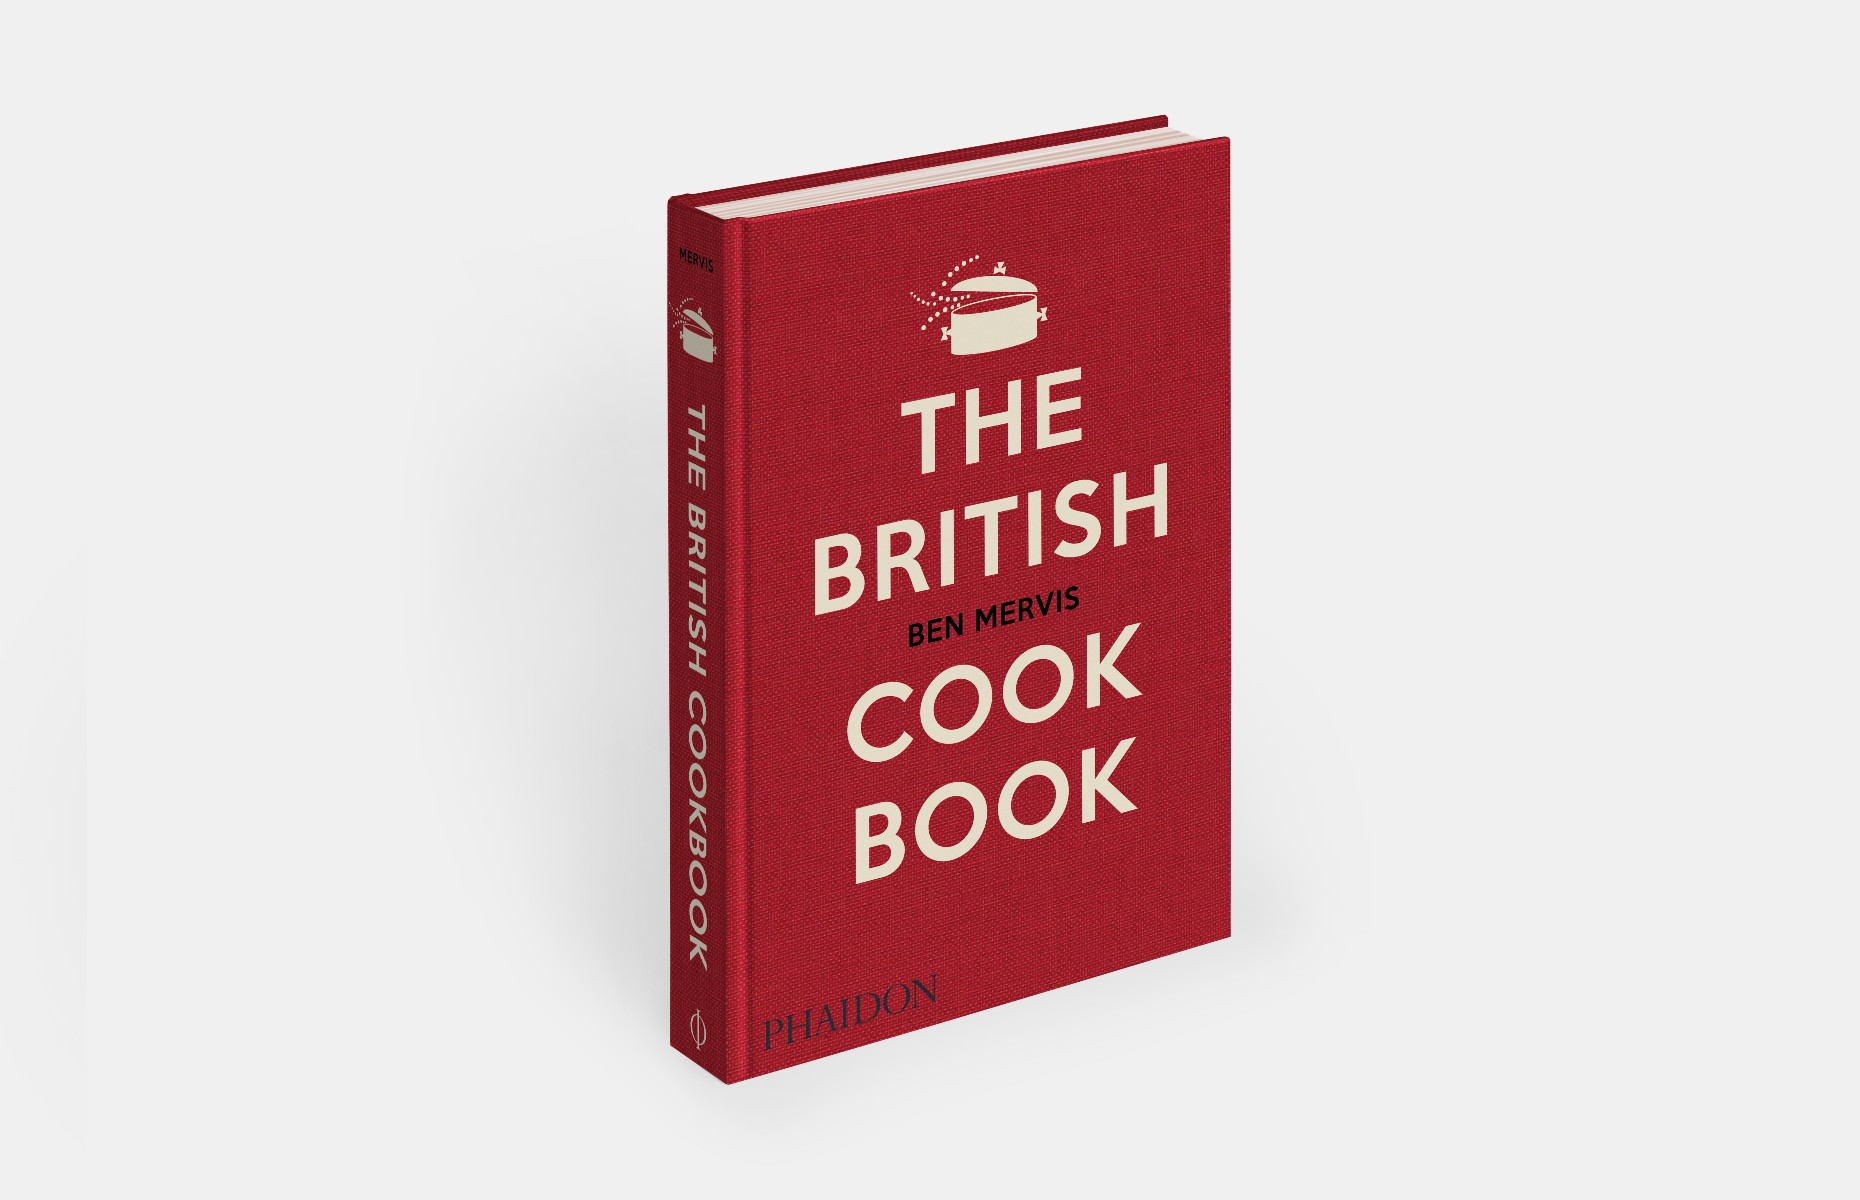 The British Cookbook (Image: Phaidon)